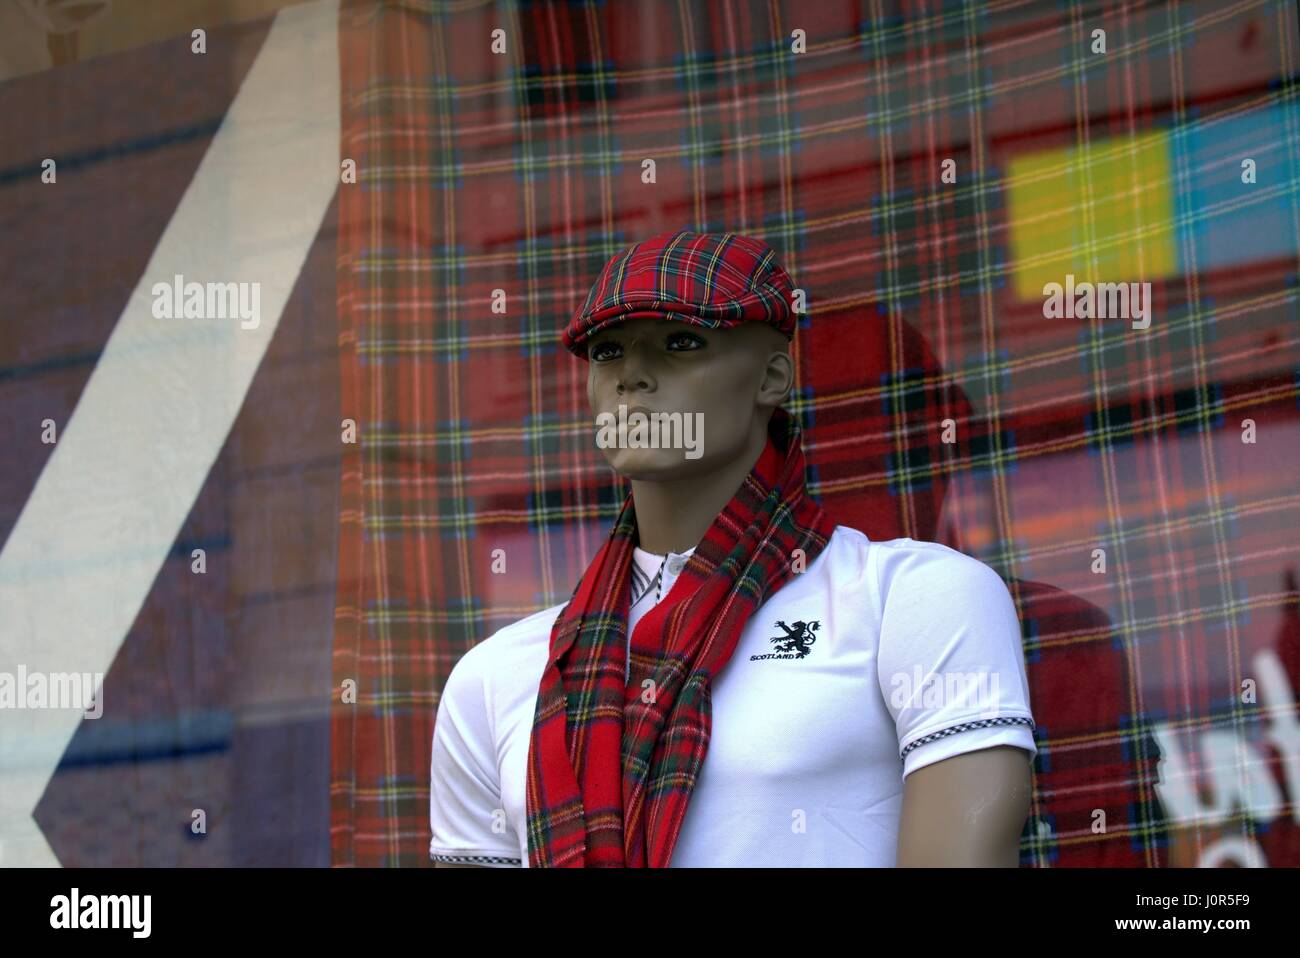 Bandiera della Scozia rugby shirt kilt sporran kitsch sciarpa tartan hat stewart Foto Stock